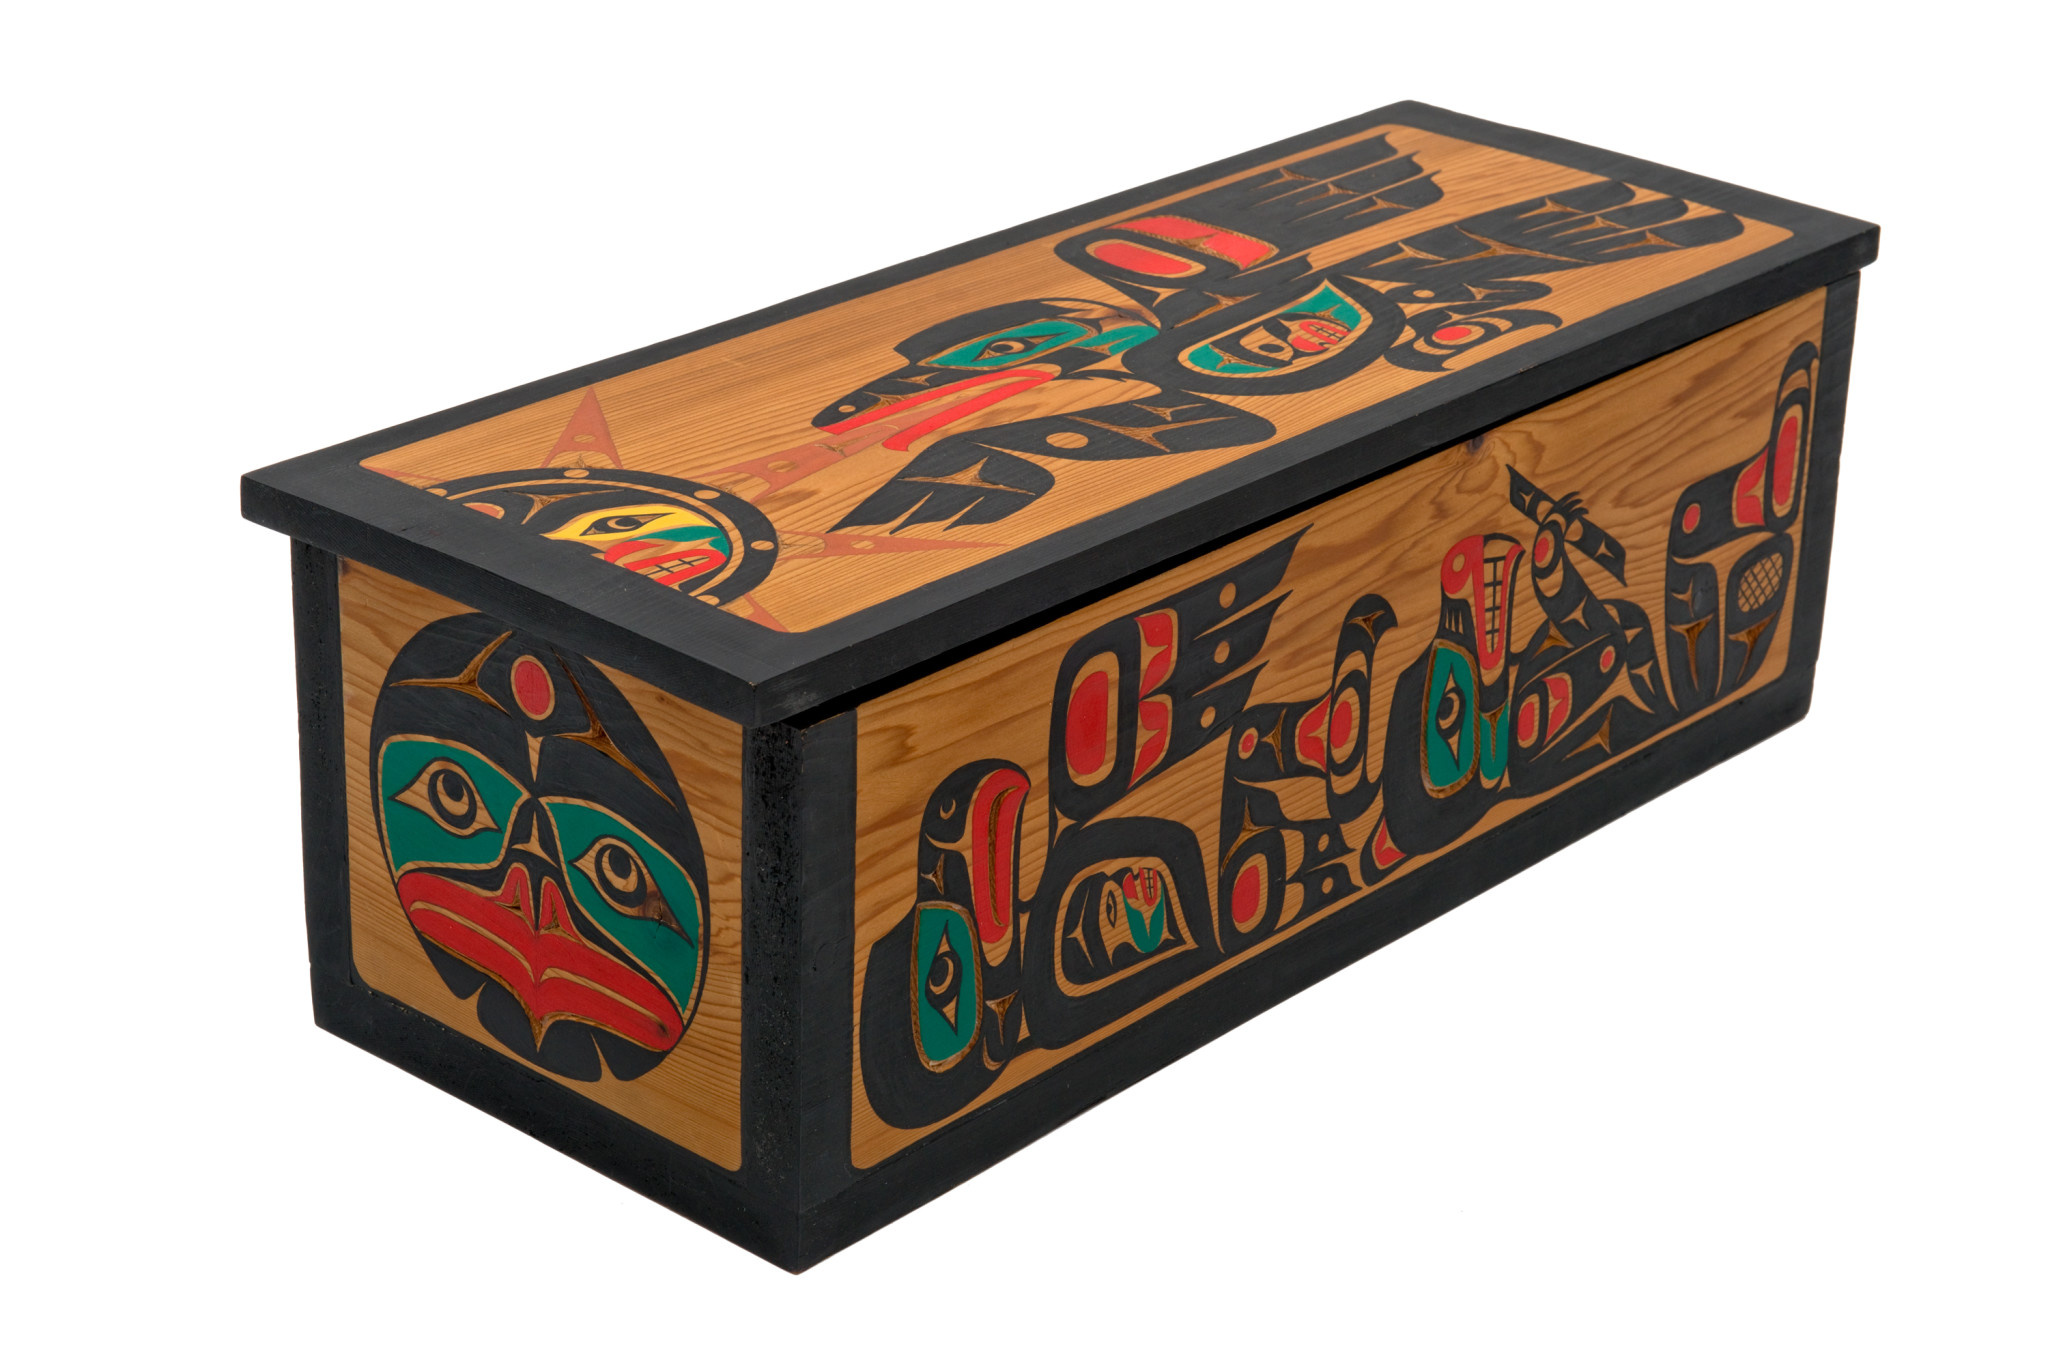 Carved Box (Kwak'waka'wakw )